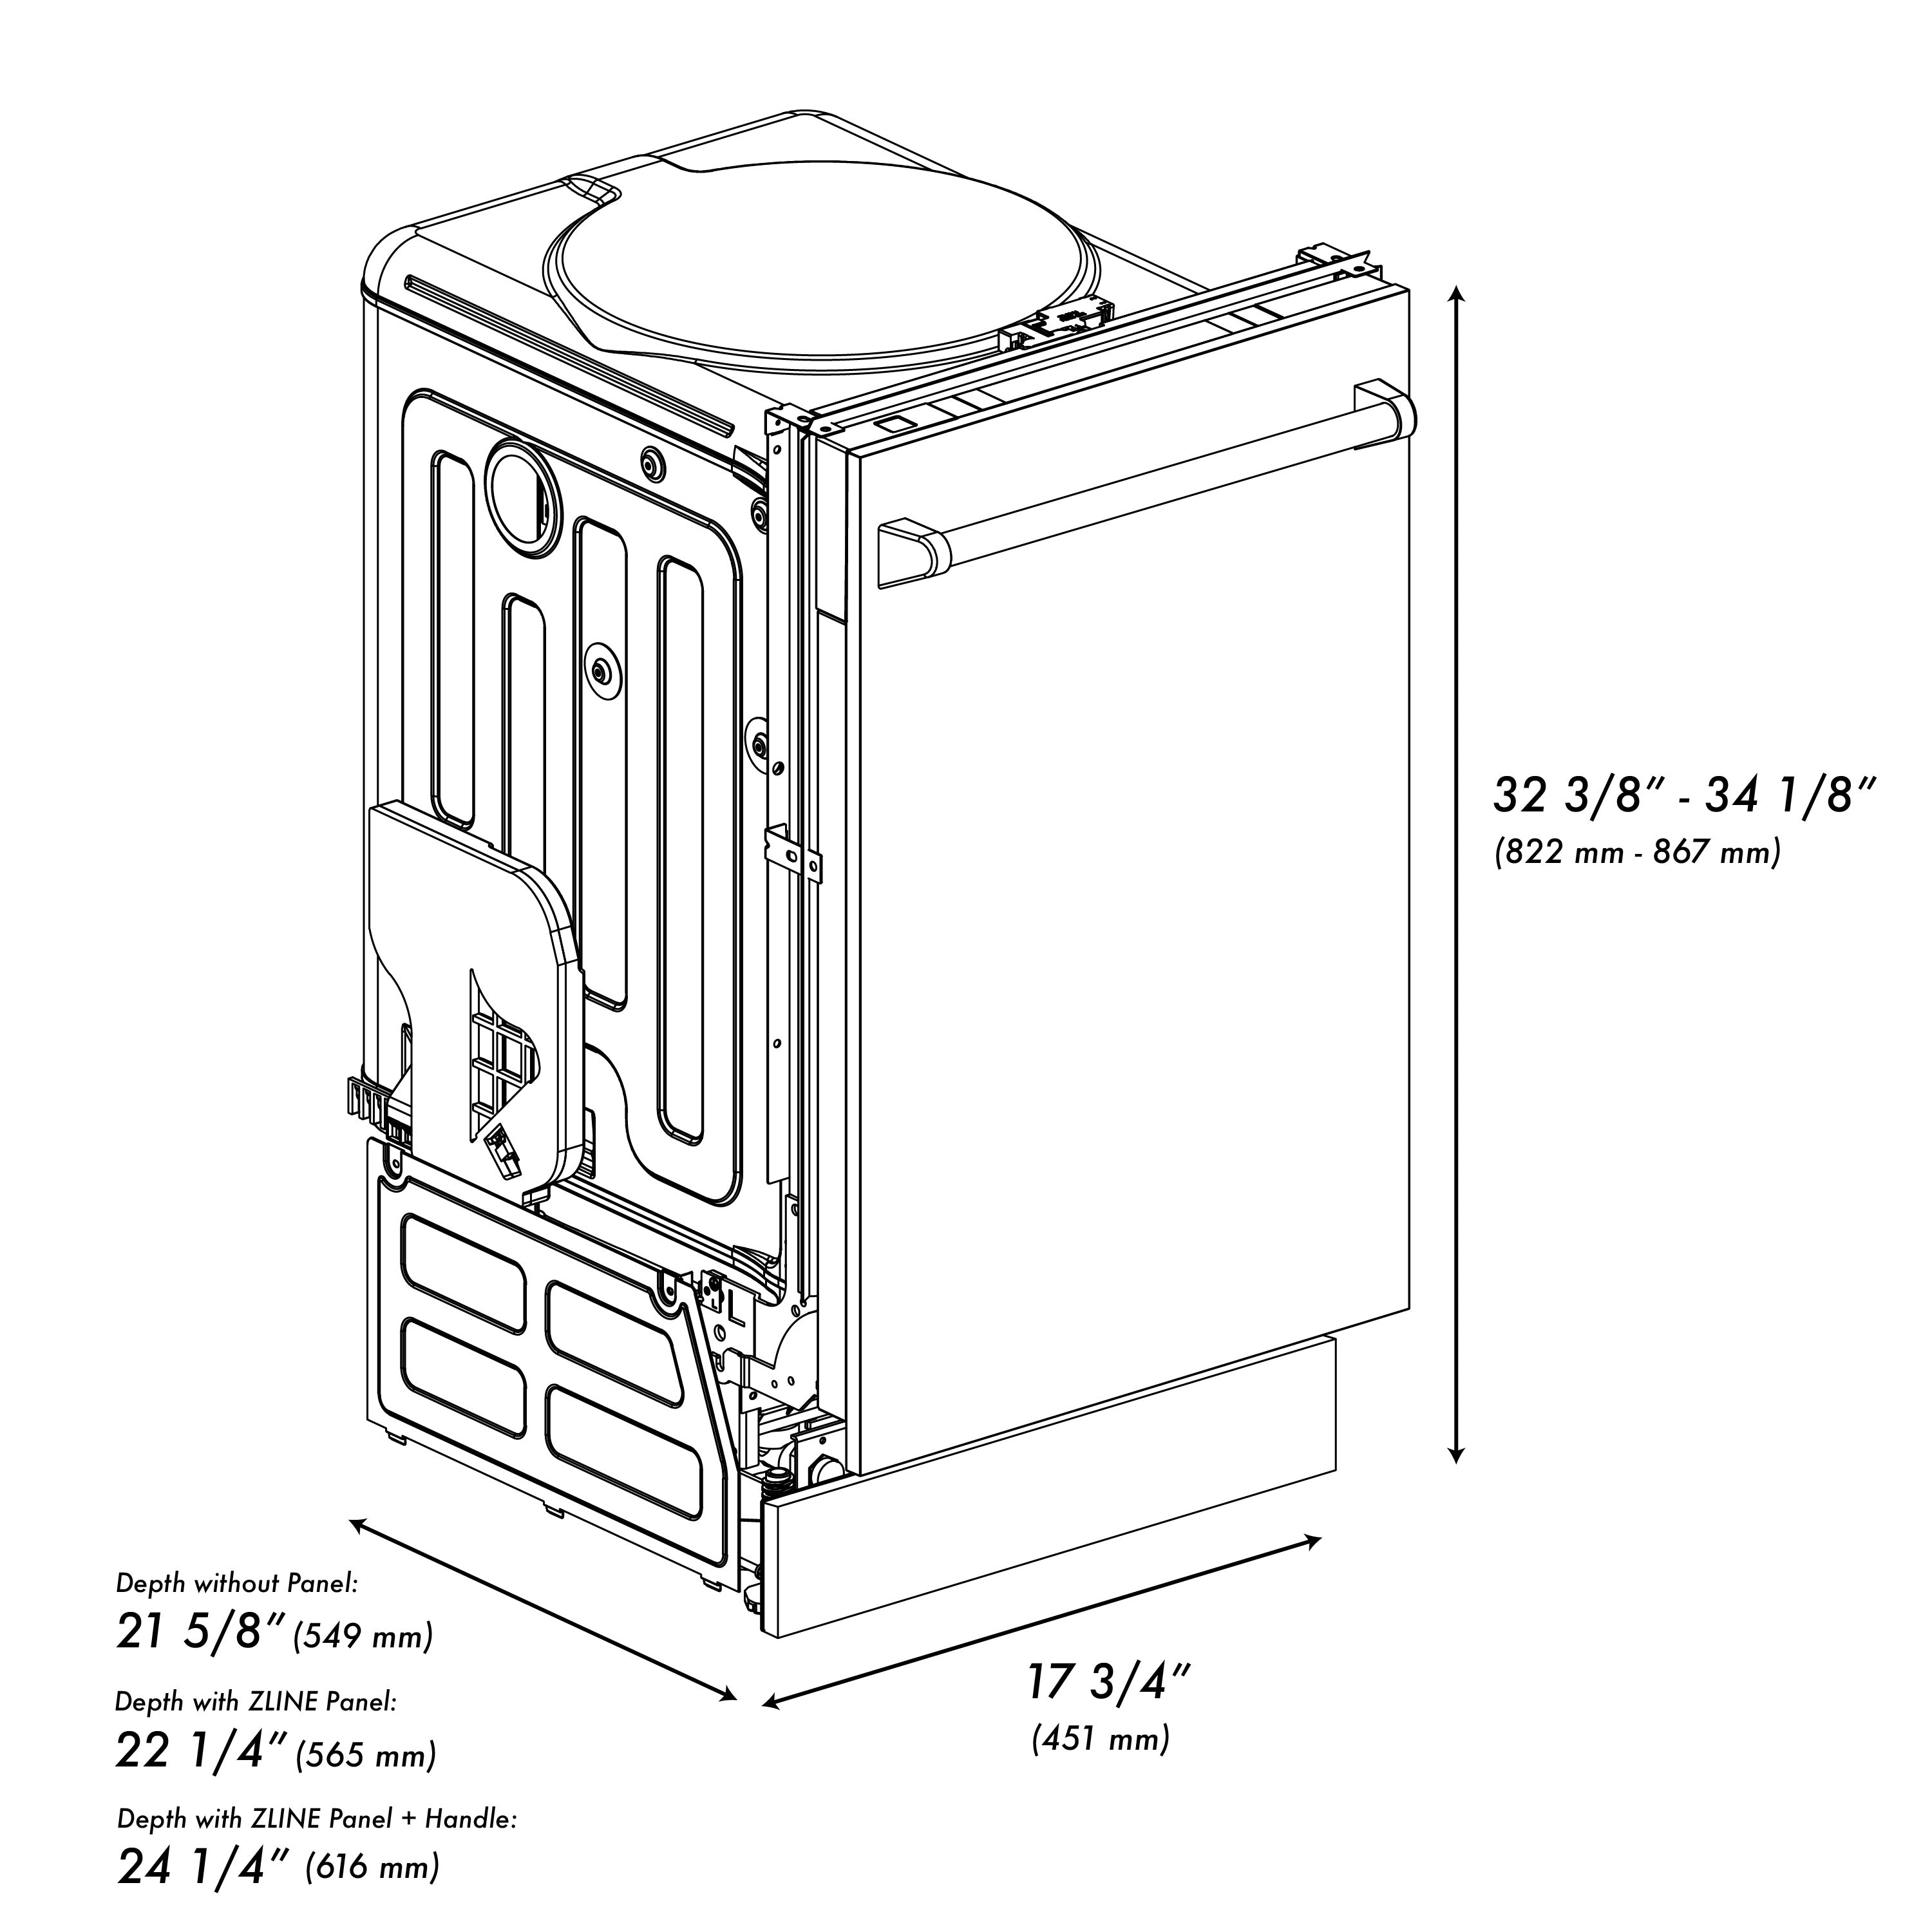 ZLINE 18" Dishwasher (DW-18) dimensional diagram with measurements.